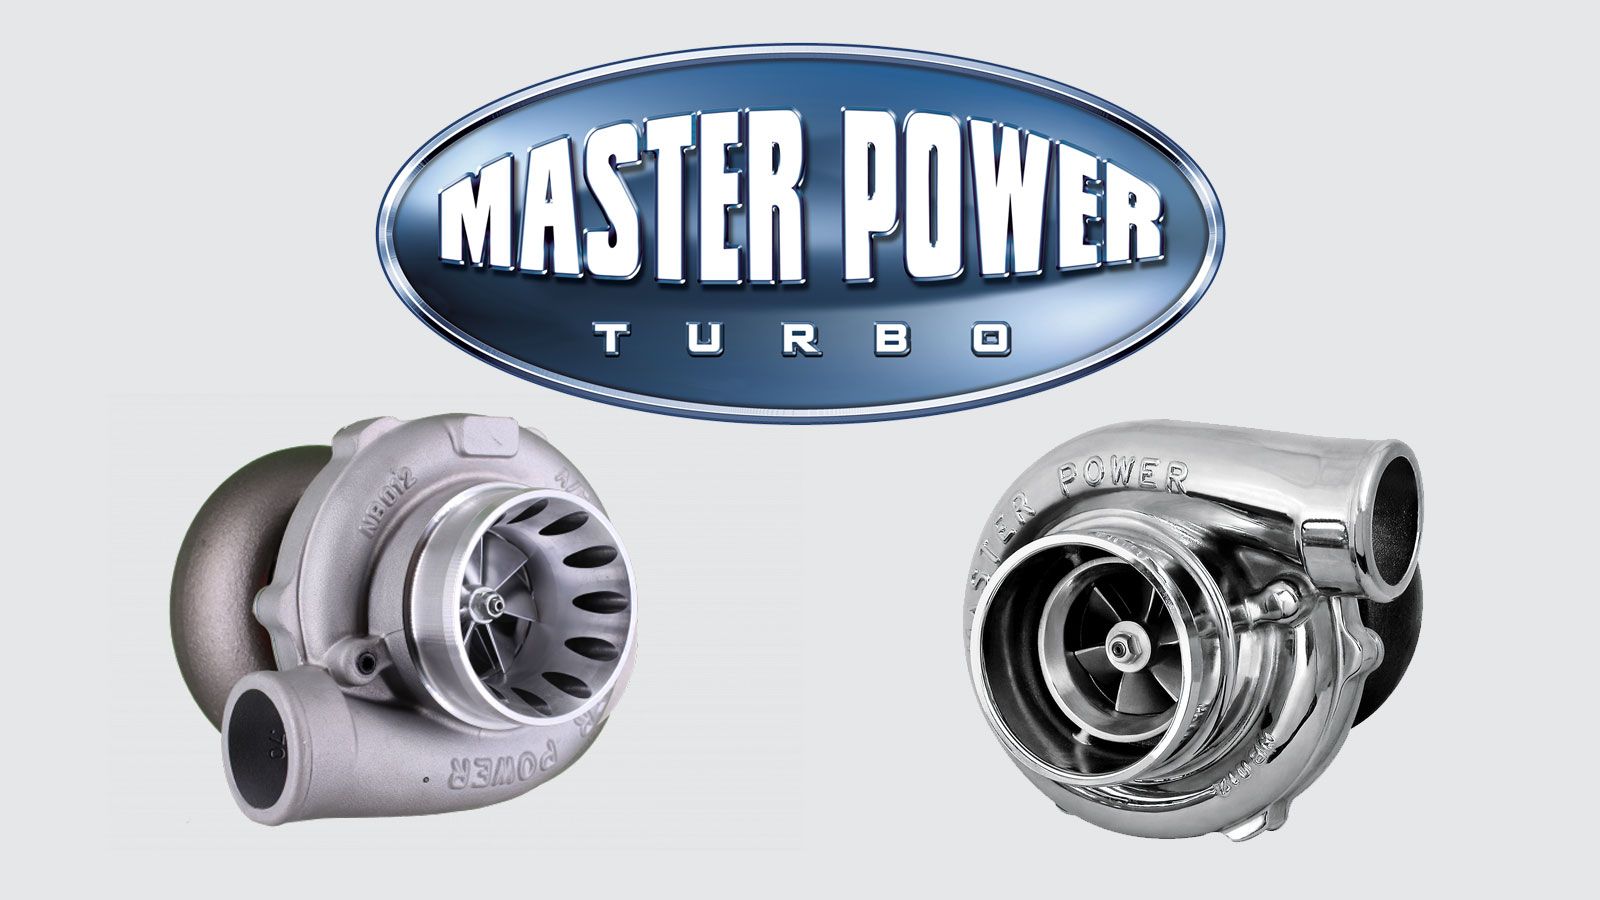 TurboDiesel Φιλιππίδης ανταλλακτικά στη Θεσσαλονίκη. Τα προϊόντα της Master Point αφορούν τουρμπίνες, τουρμπίνες ρουλεμάν, βελτίωση αγωνιστικών αυτοκινήτων και turbodiesel. Στην Ελλάδα θα τα βρείτε απ